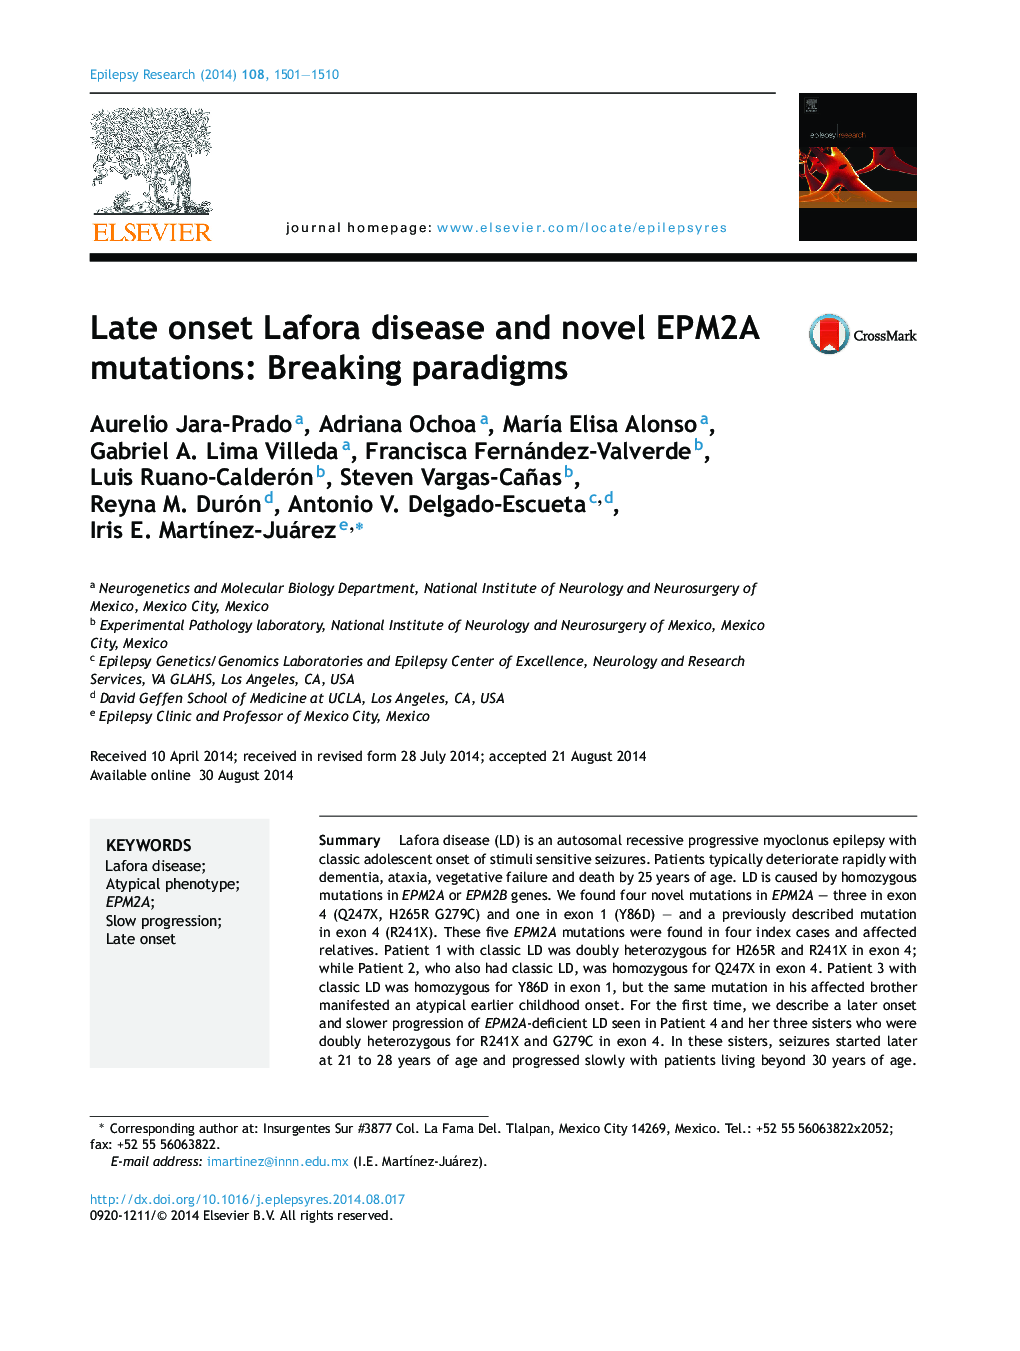 Late onset Lafora disease and novel EPM2A mutations: Breaking paradigms